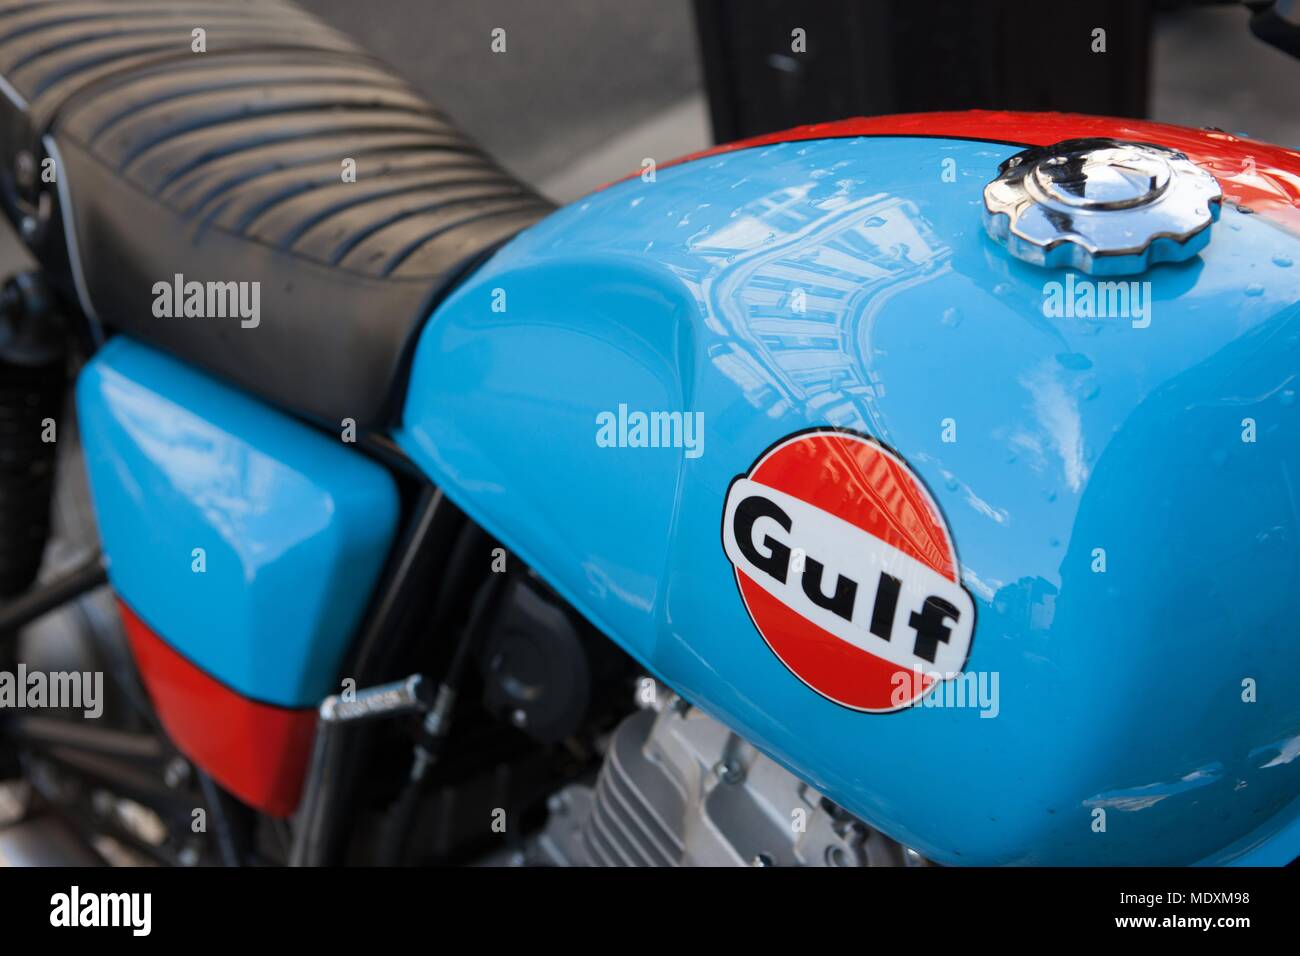 Paris, Rue de l'Ecole de Médecine, motorcycle with the Gulf logo Stock  Photo - Alamy